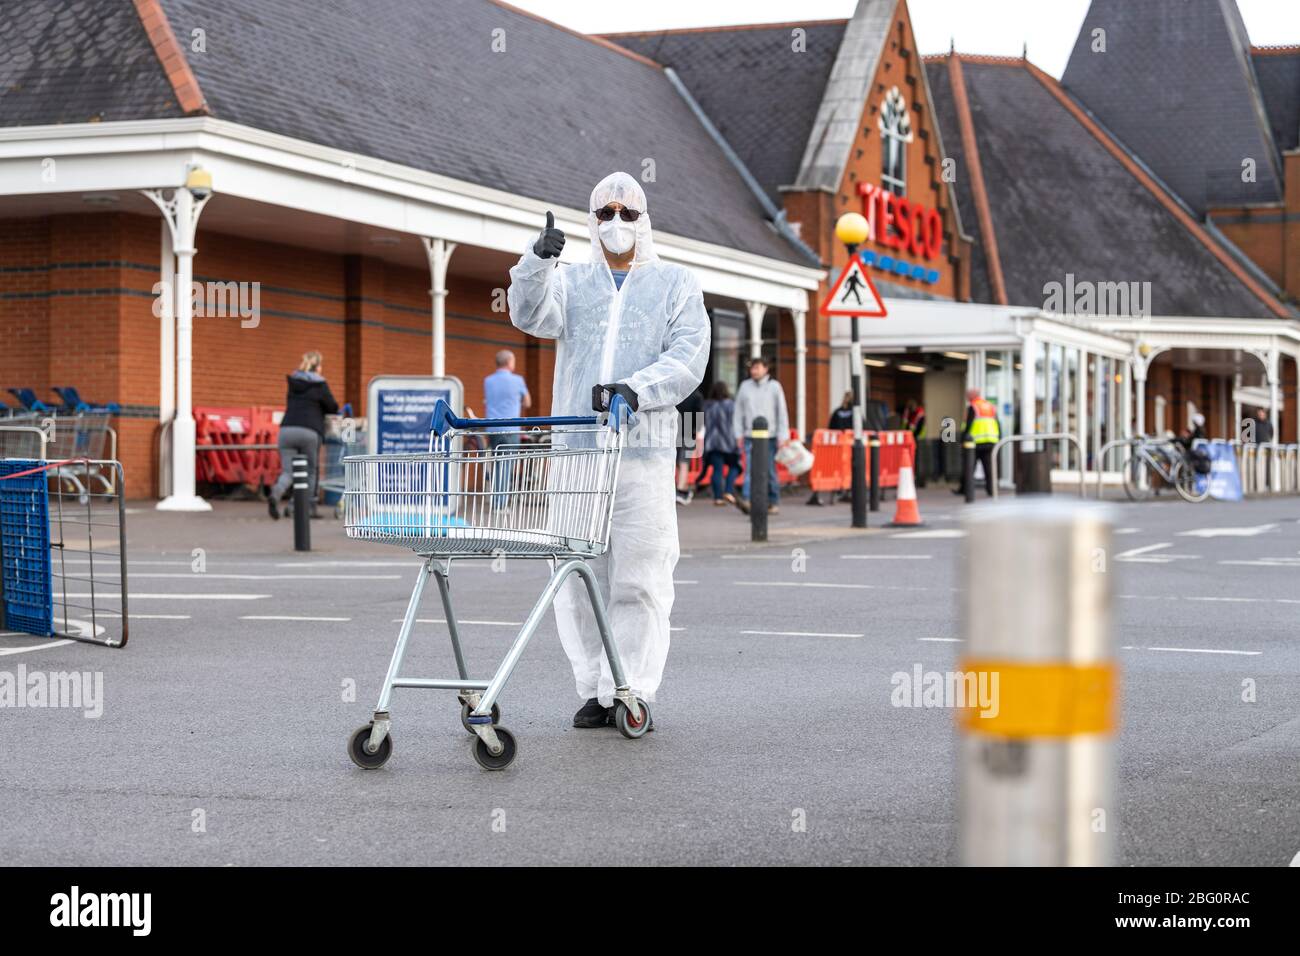 Shopper wears a full hazmat suit and mask at the Cheltenham Tesco Superstore during the Coronavirus pandemic. Stock Photo